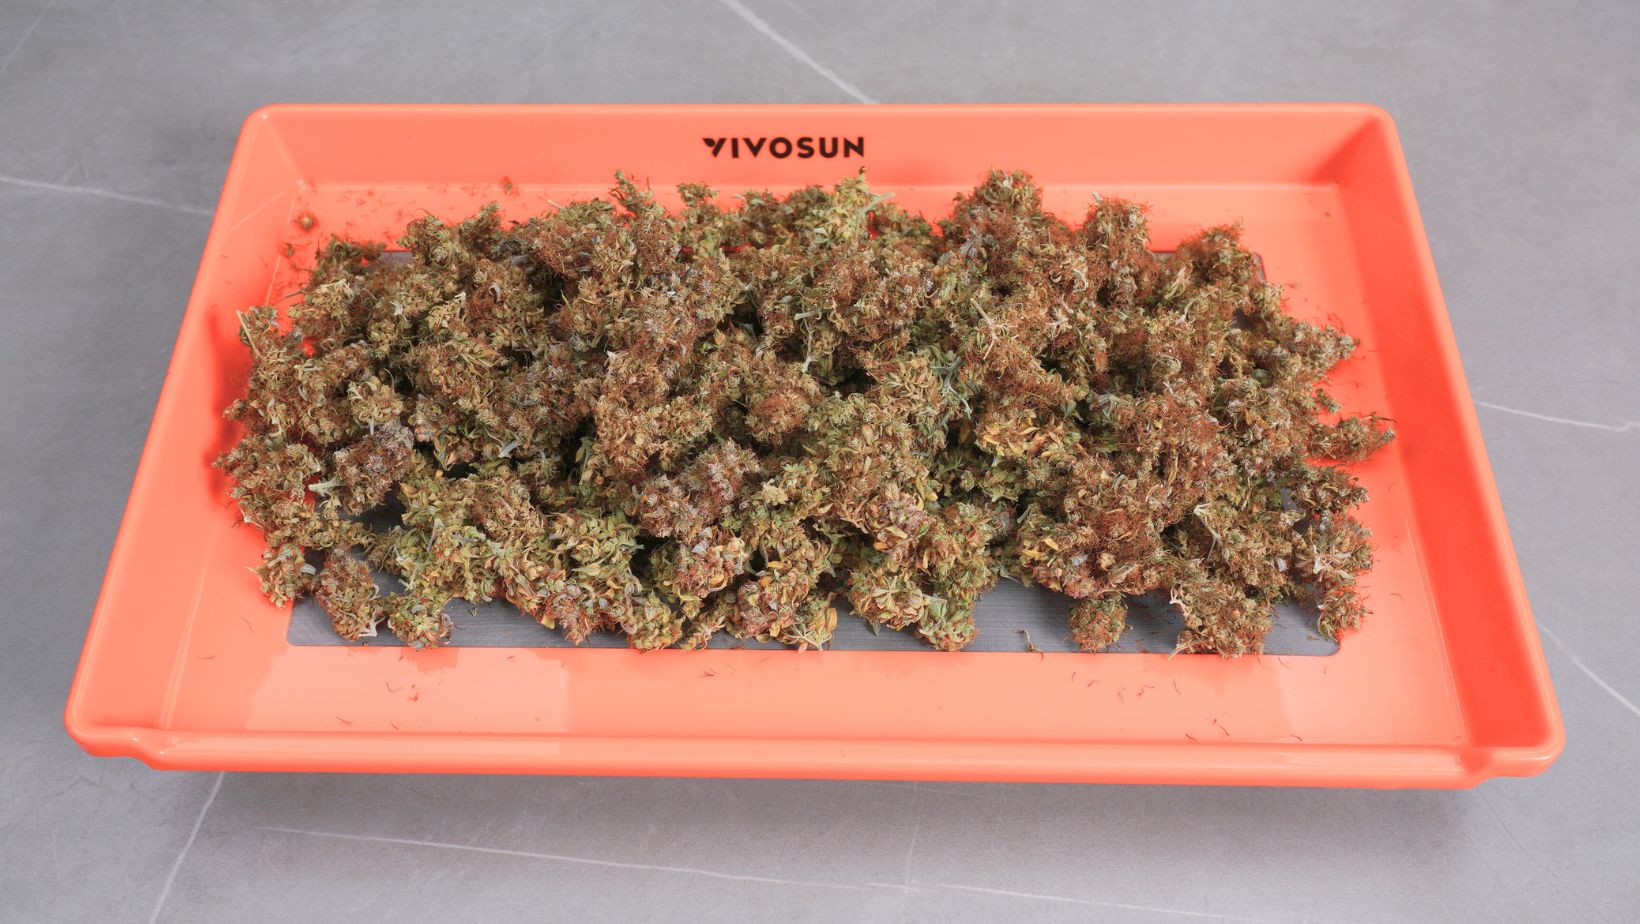 Cannabis yield